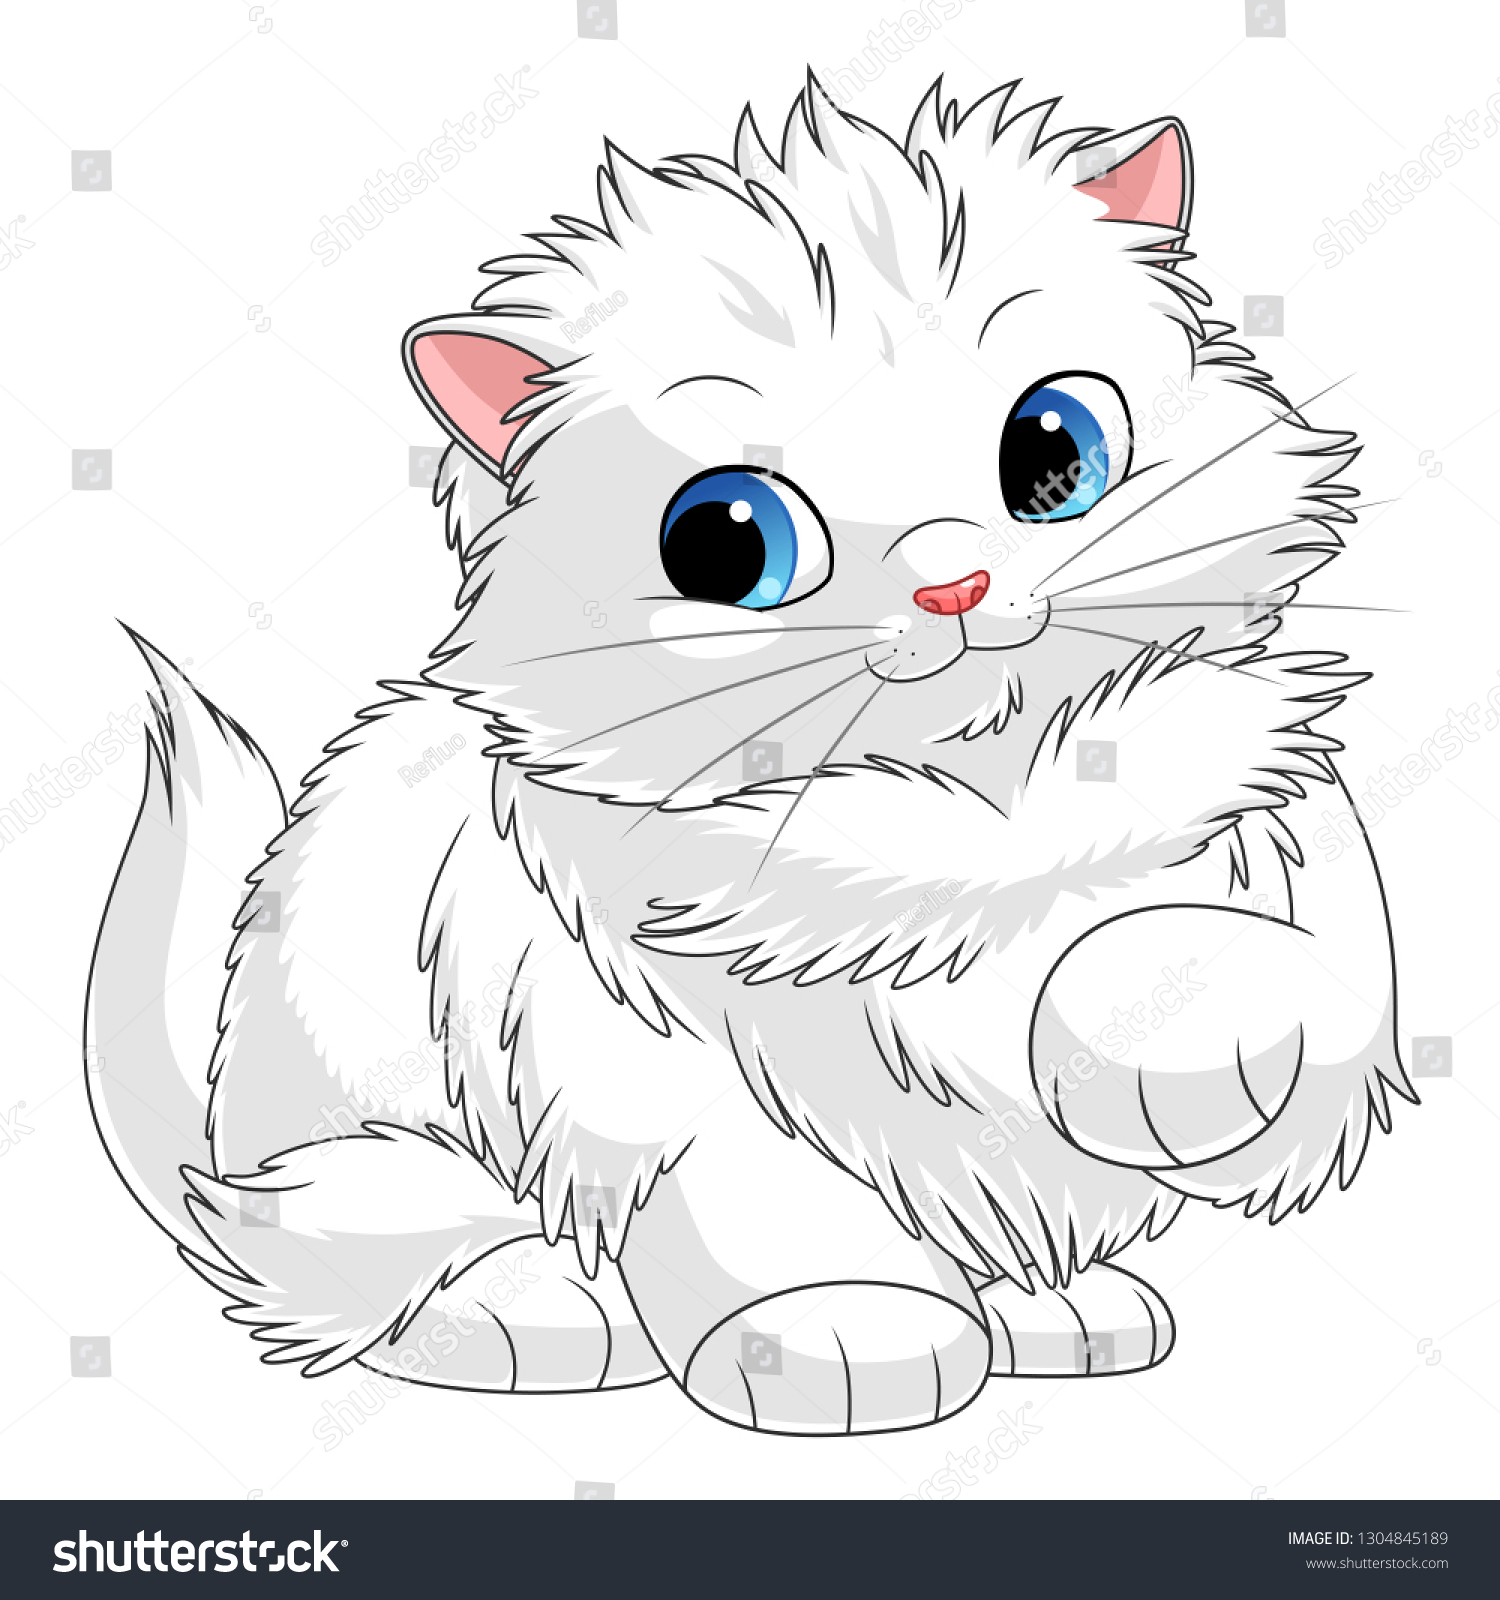 Kitten Images Cartoon - Cute Cartoon White Kitten Vector Image By C Reginast777 Vector Stock